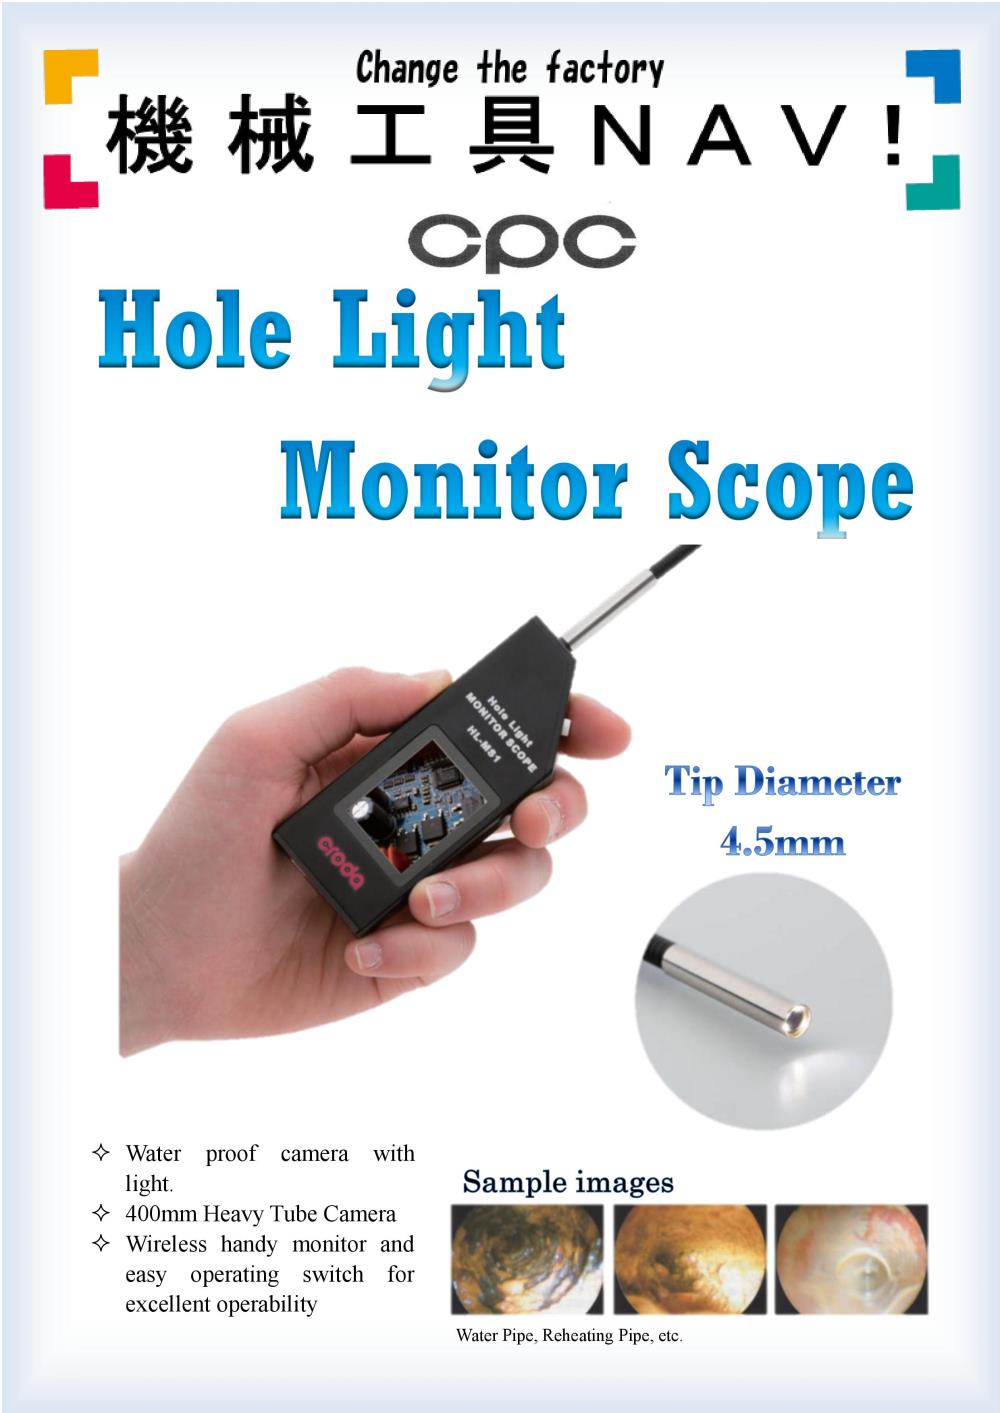 Hole light Monitor Scope